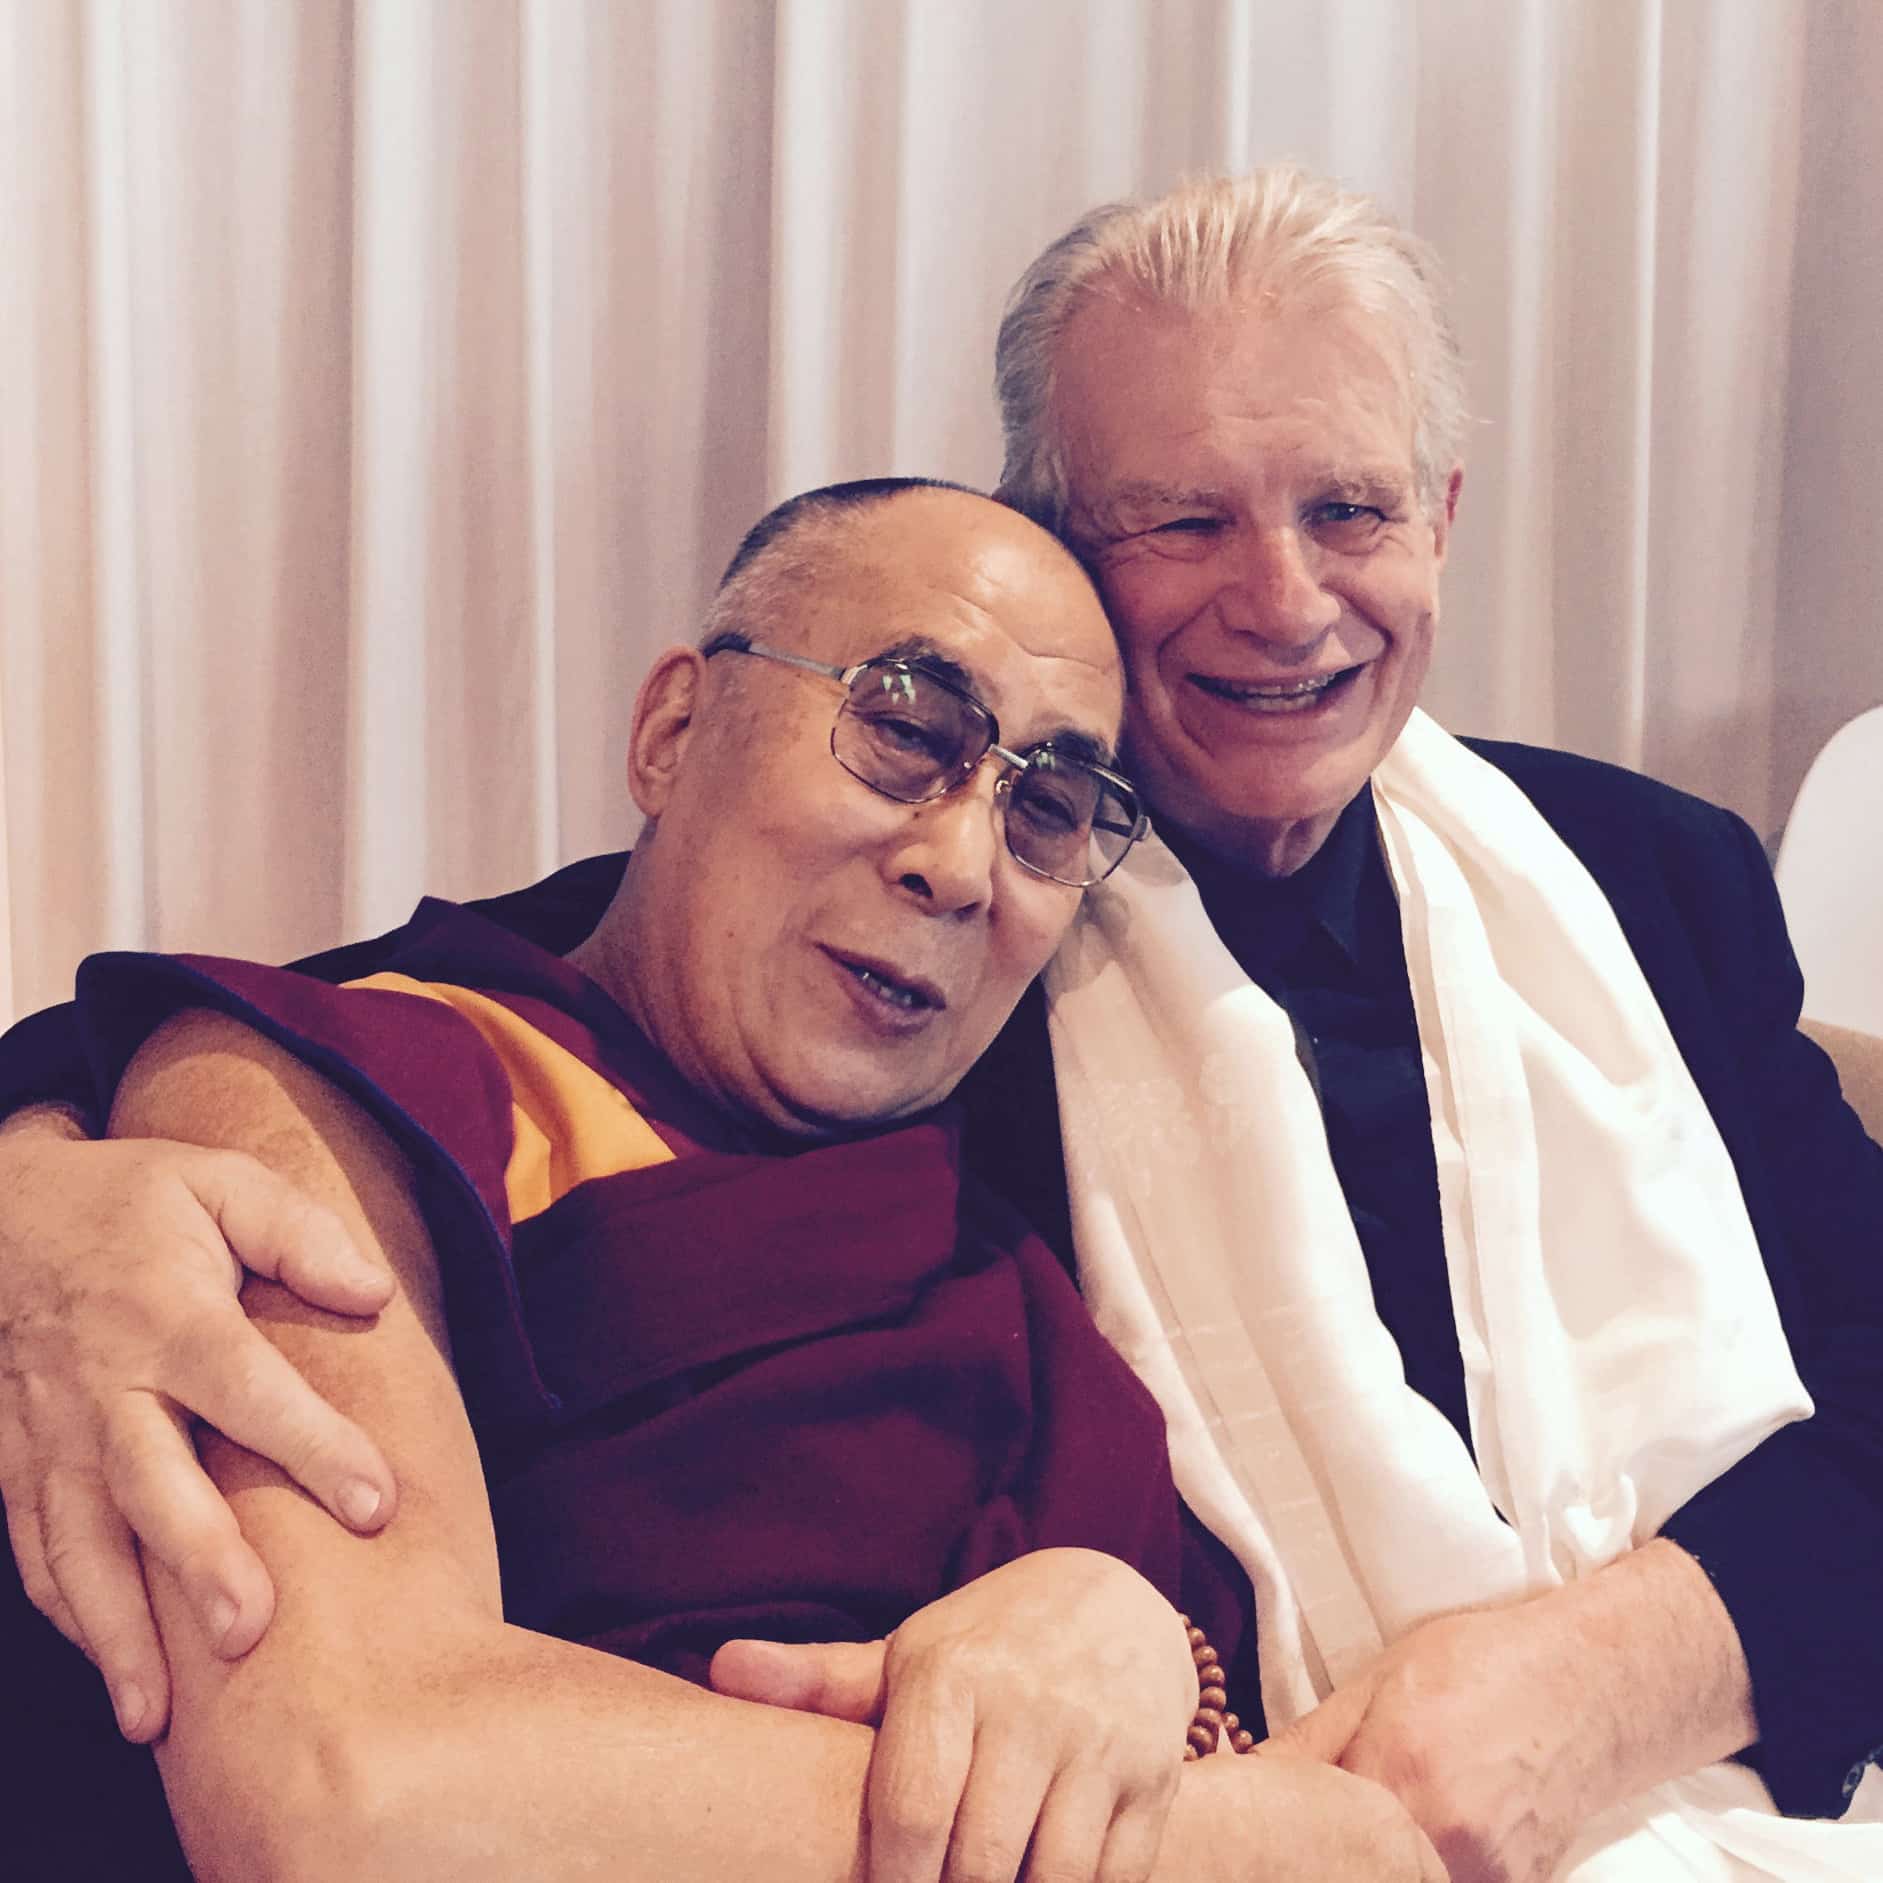 His Holiness the Dalai Lama with Rev. Bill Crews.